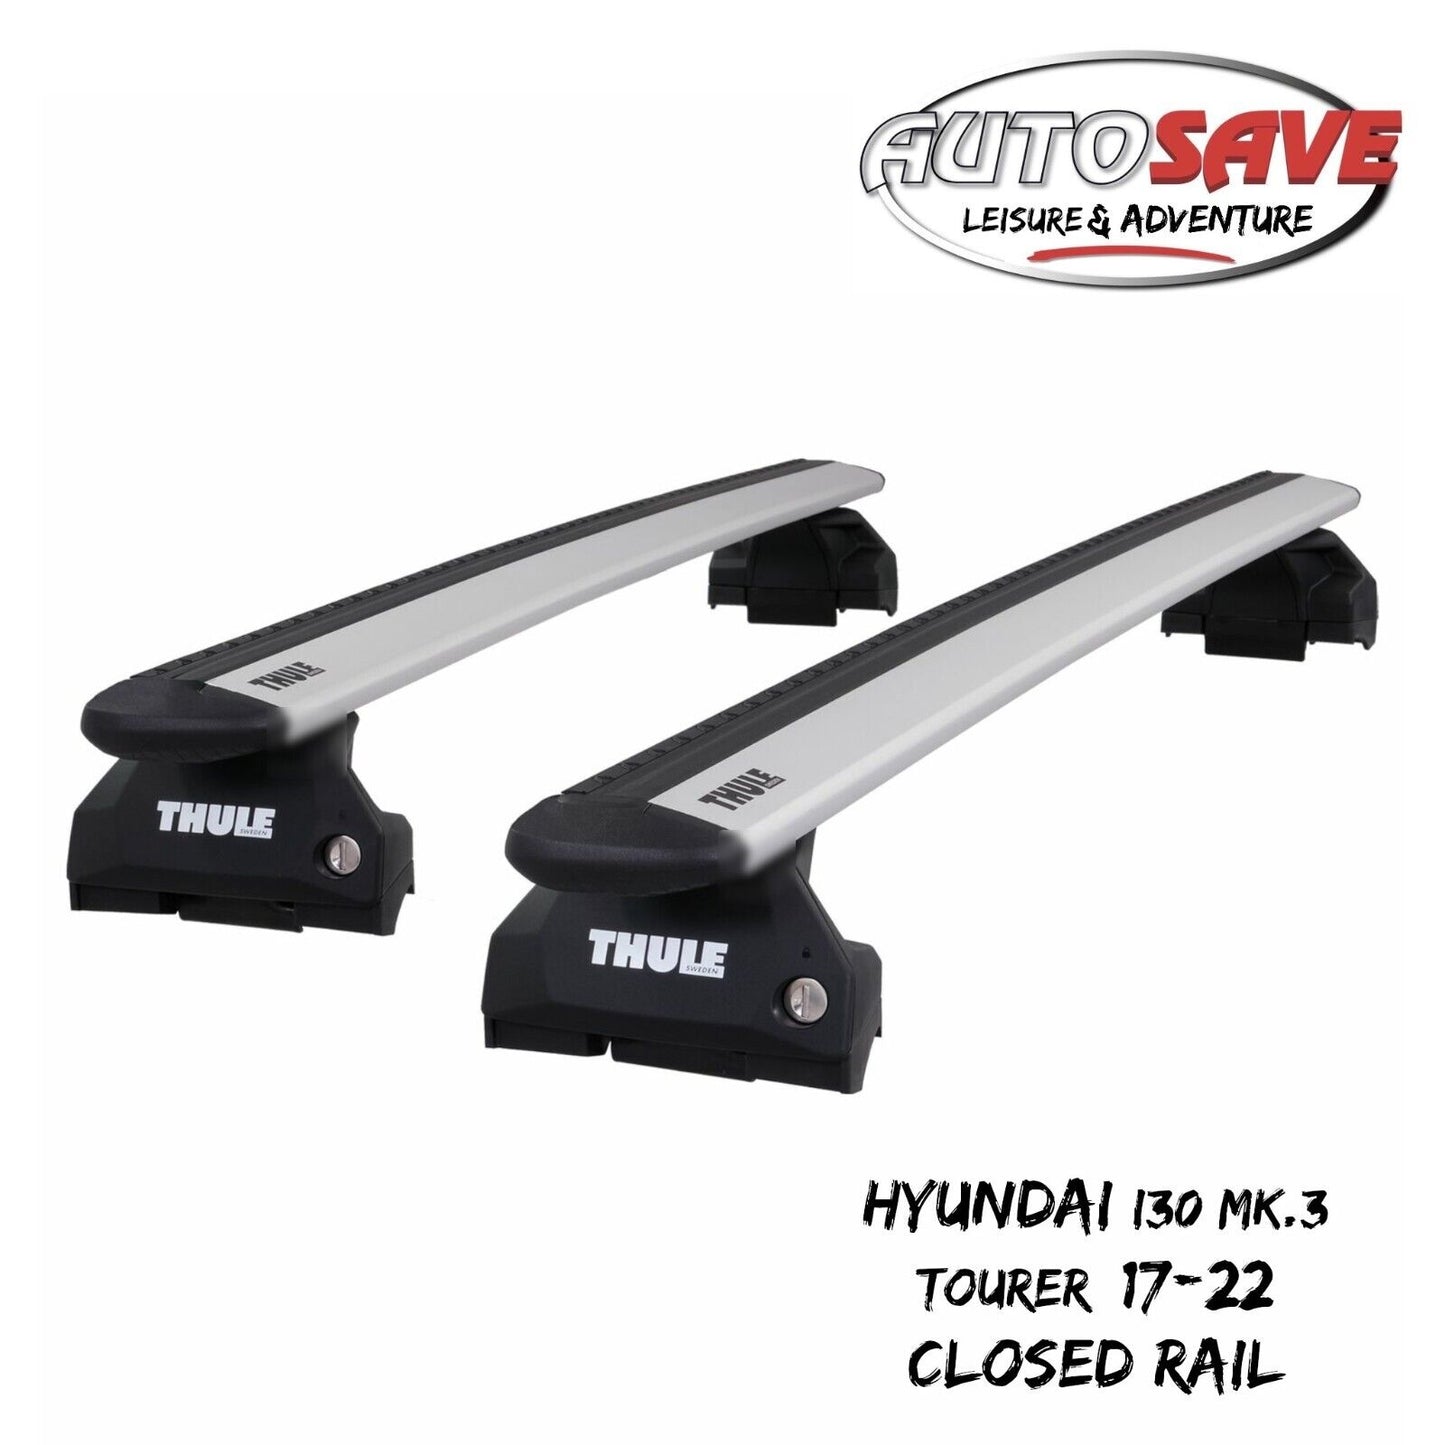 Thule WingBar Evo Silver Roof Bars fit Hyundai i30 Mk.3 Tourer 17-22 Closed Rail